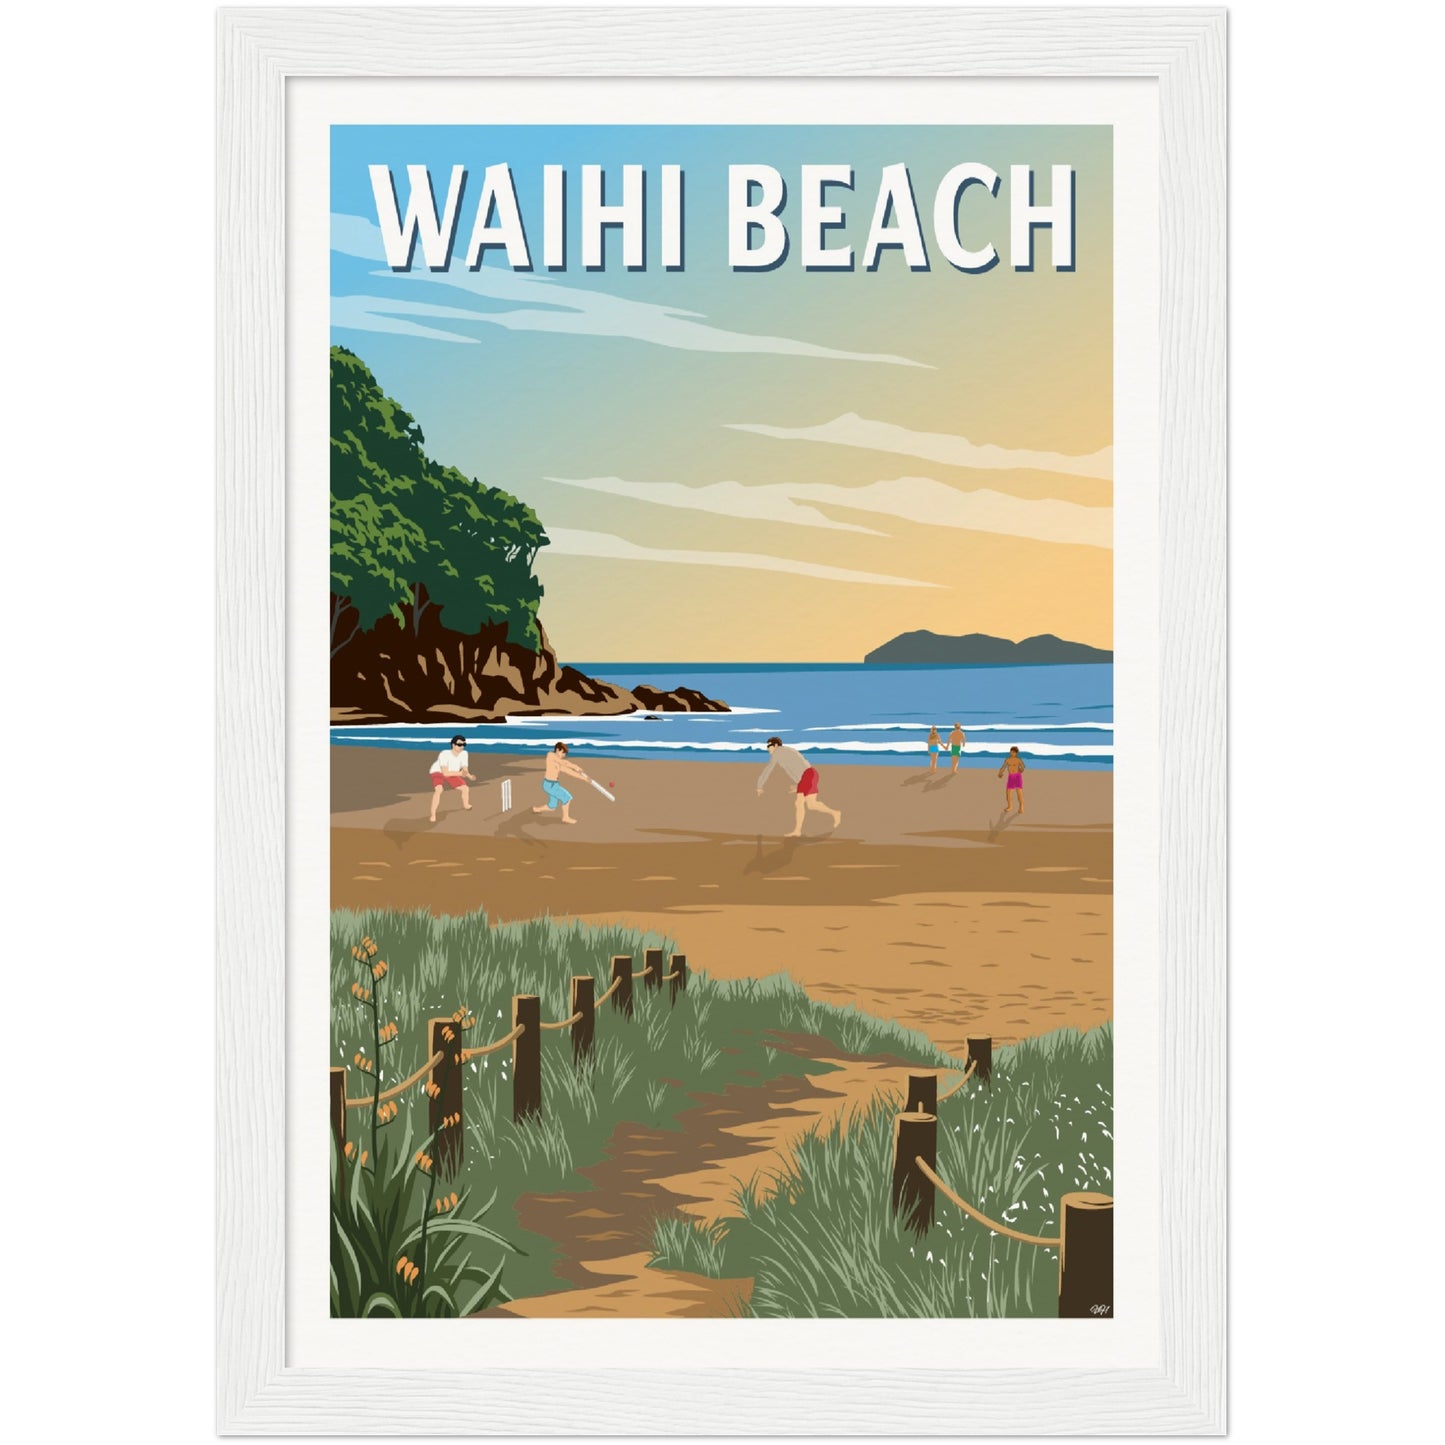 Waihi Beach Travel Poster, New Zealand